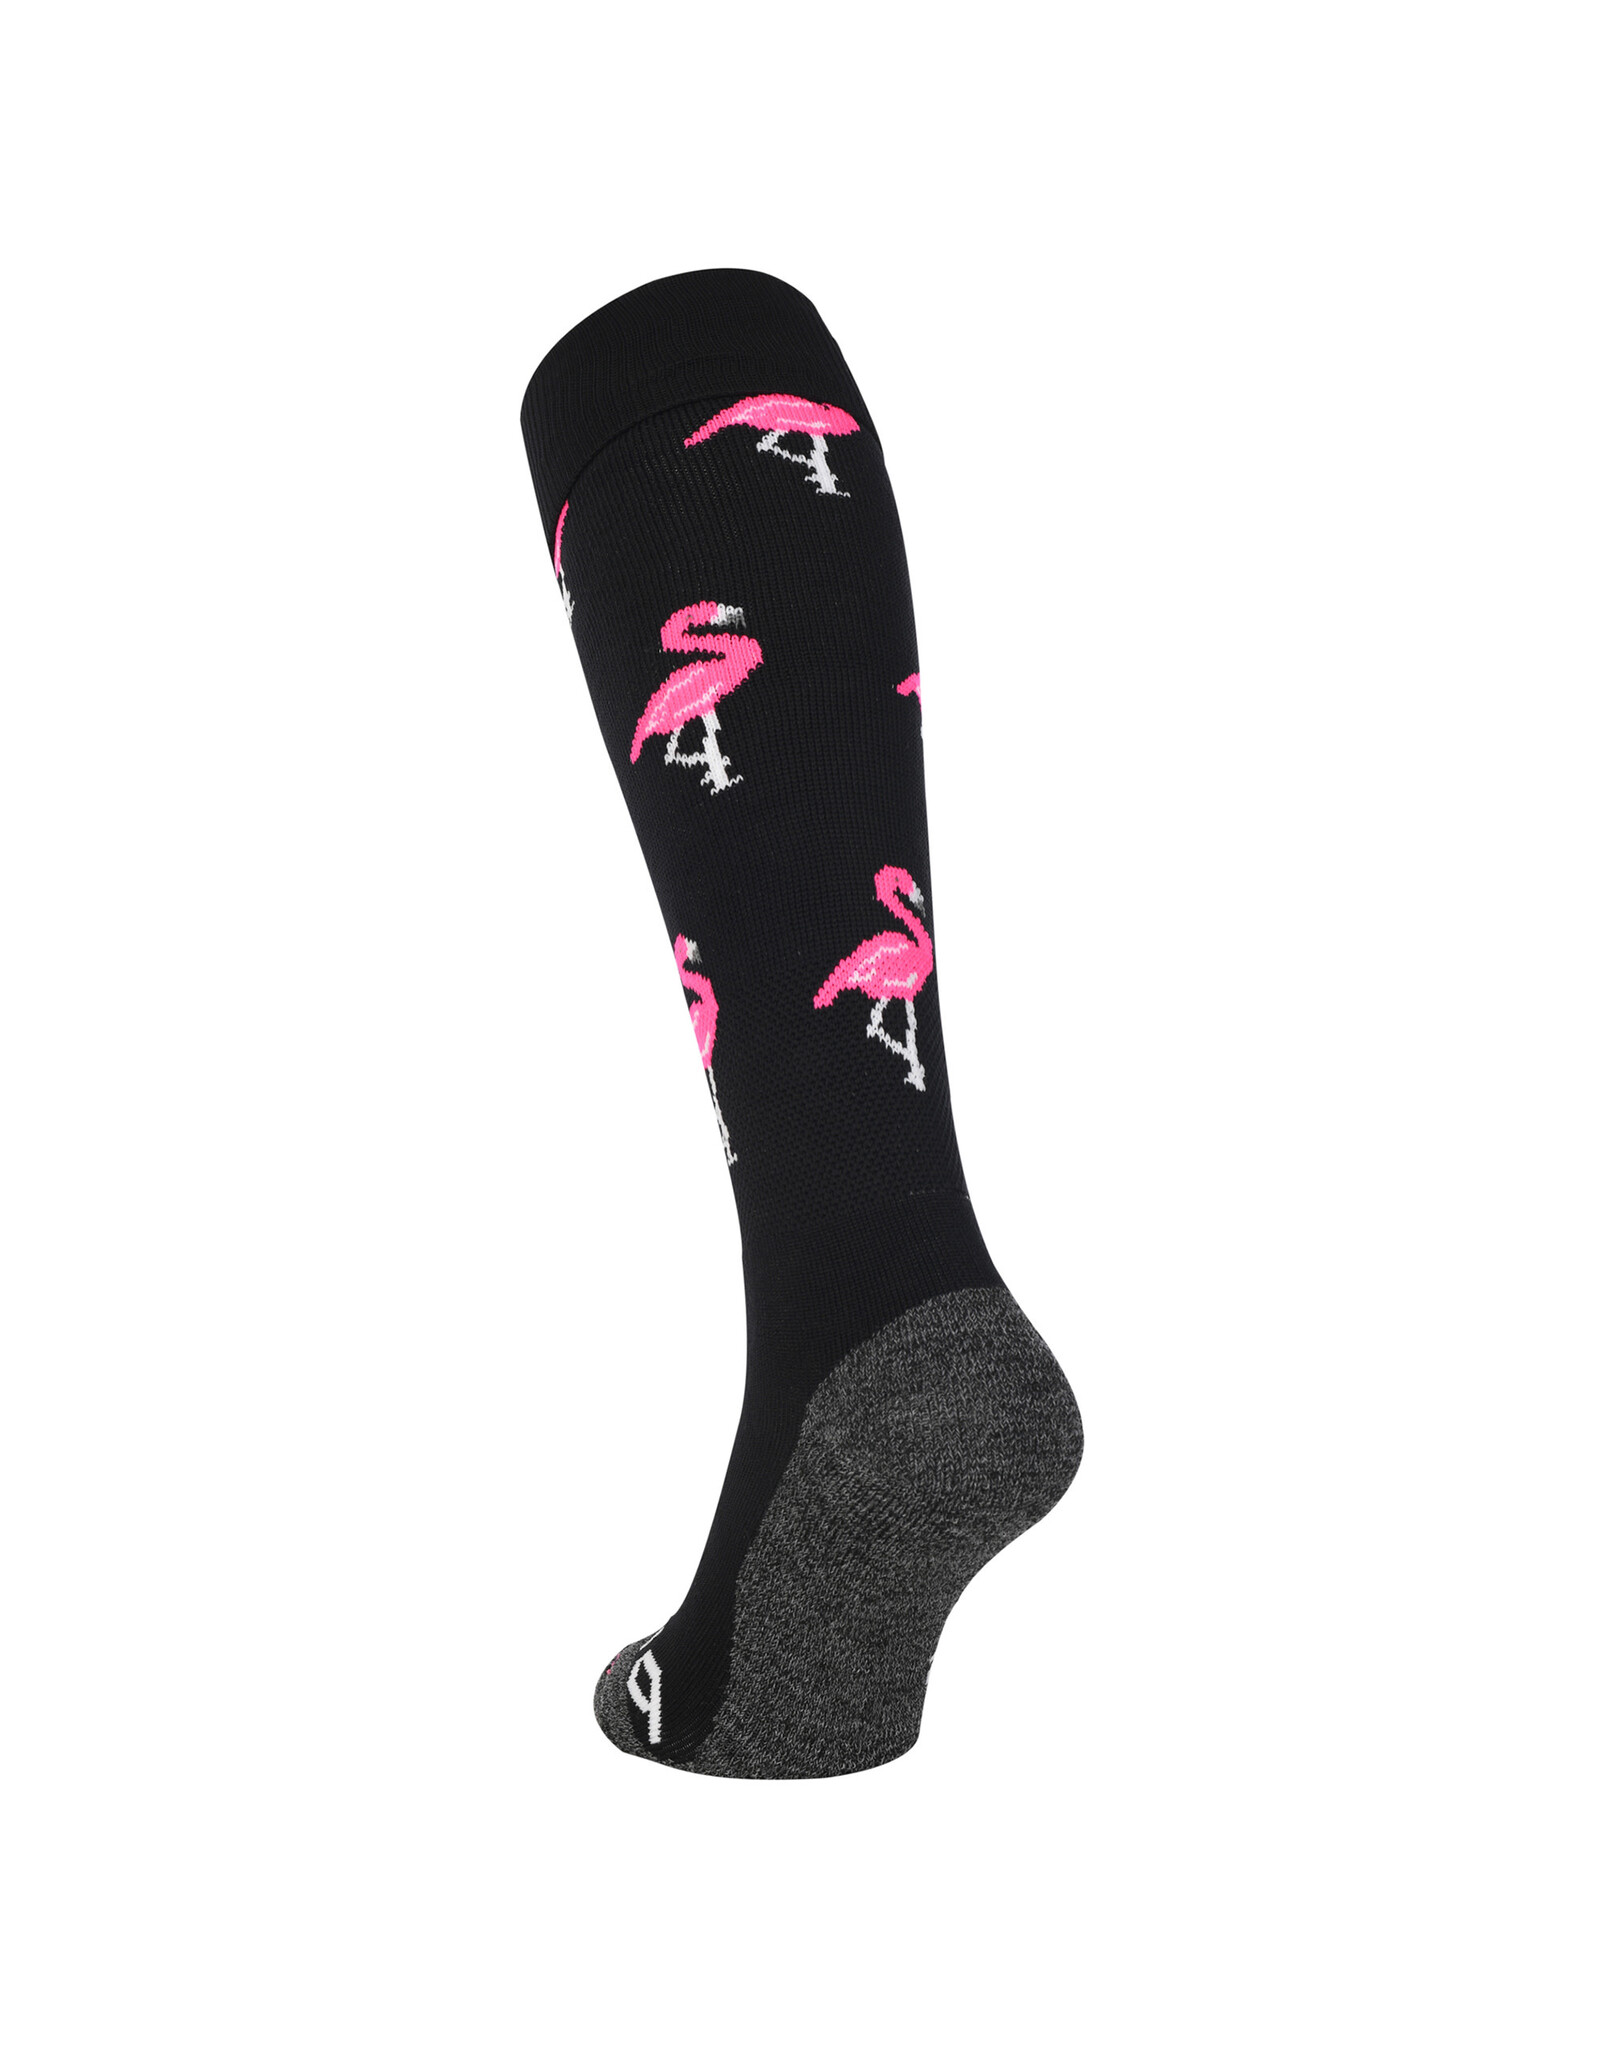 Socks Flamingo Black/Pink